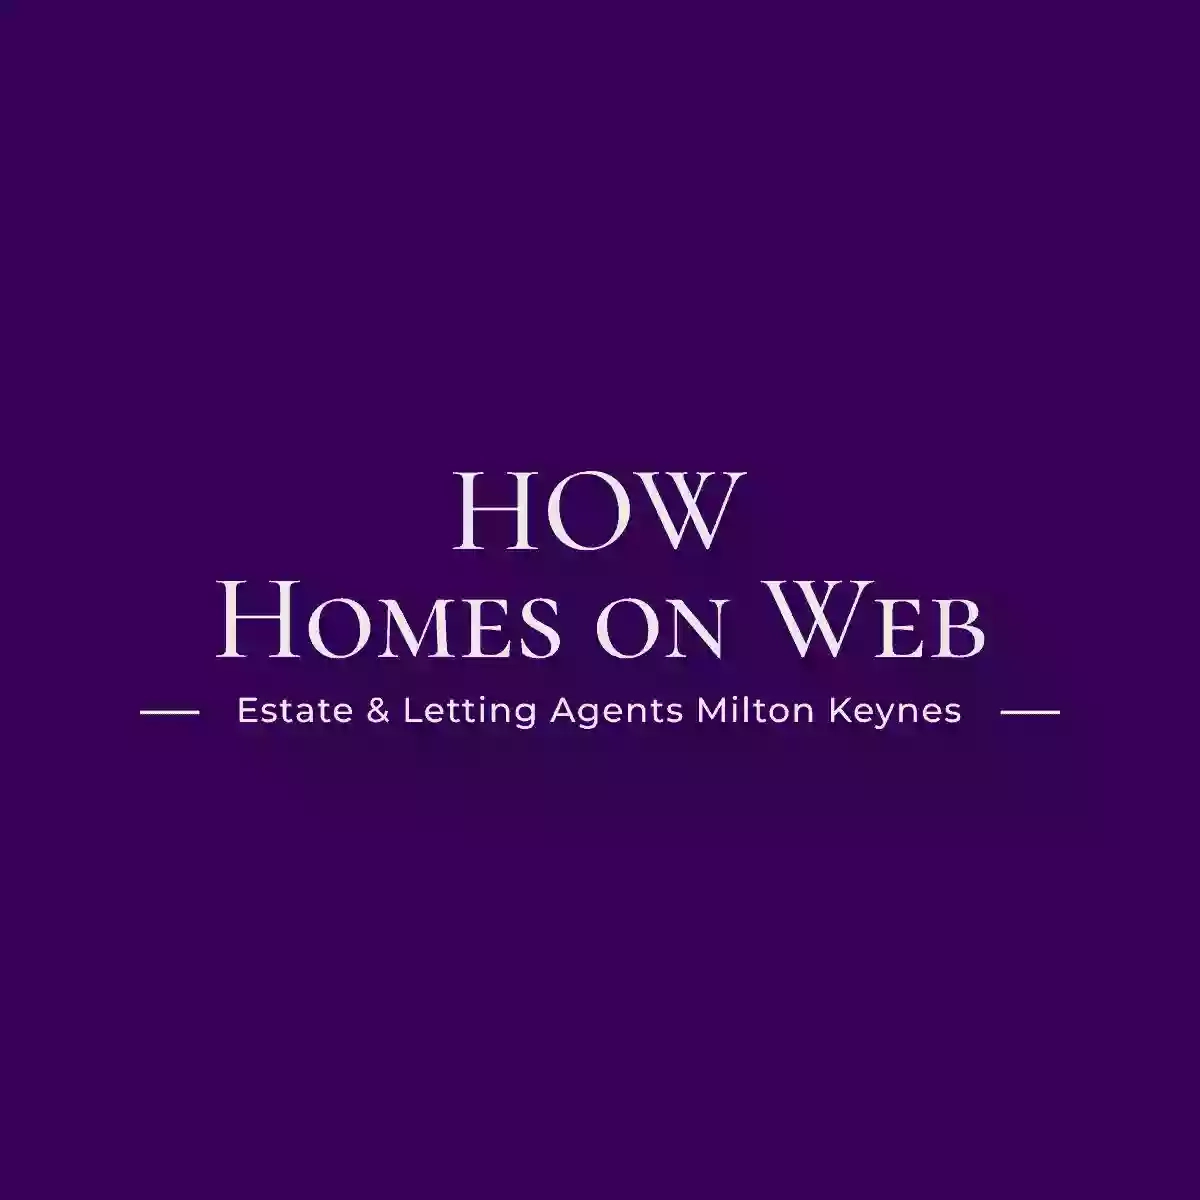 Homes On Web Ltd